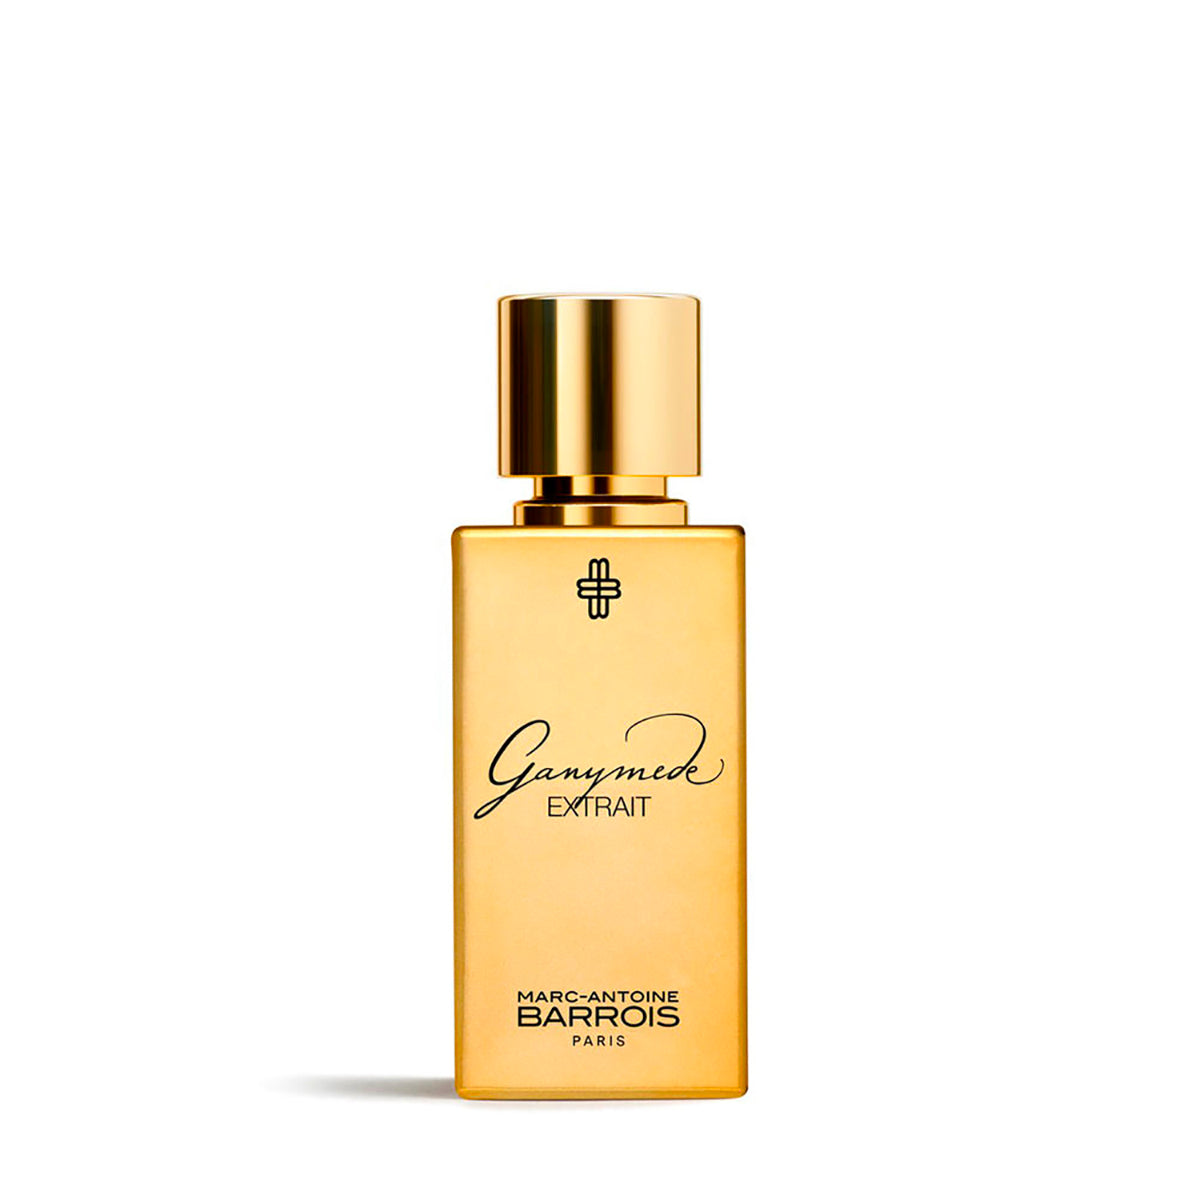 Ganymede Extrait de Parfum at Indigo Perfumery